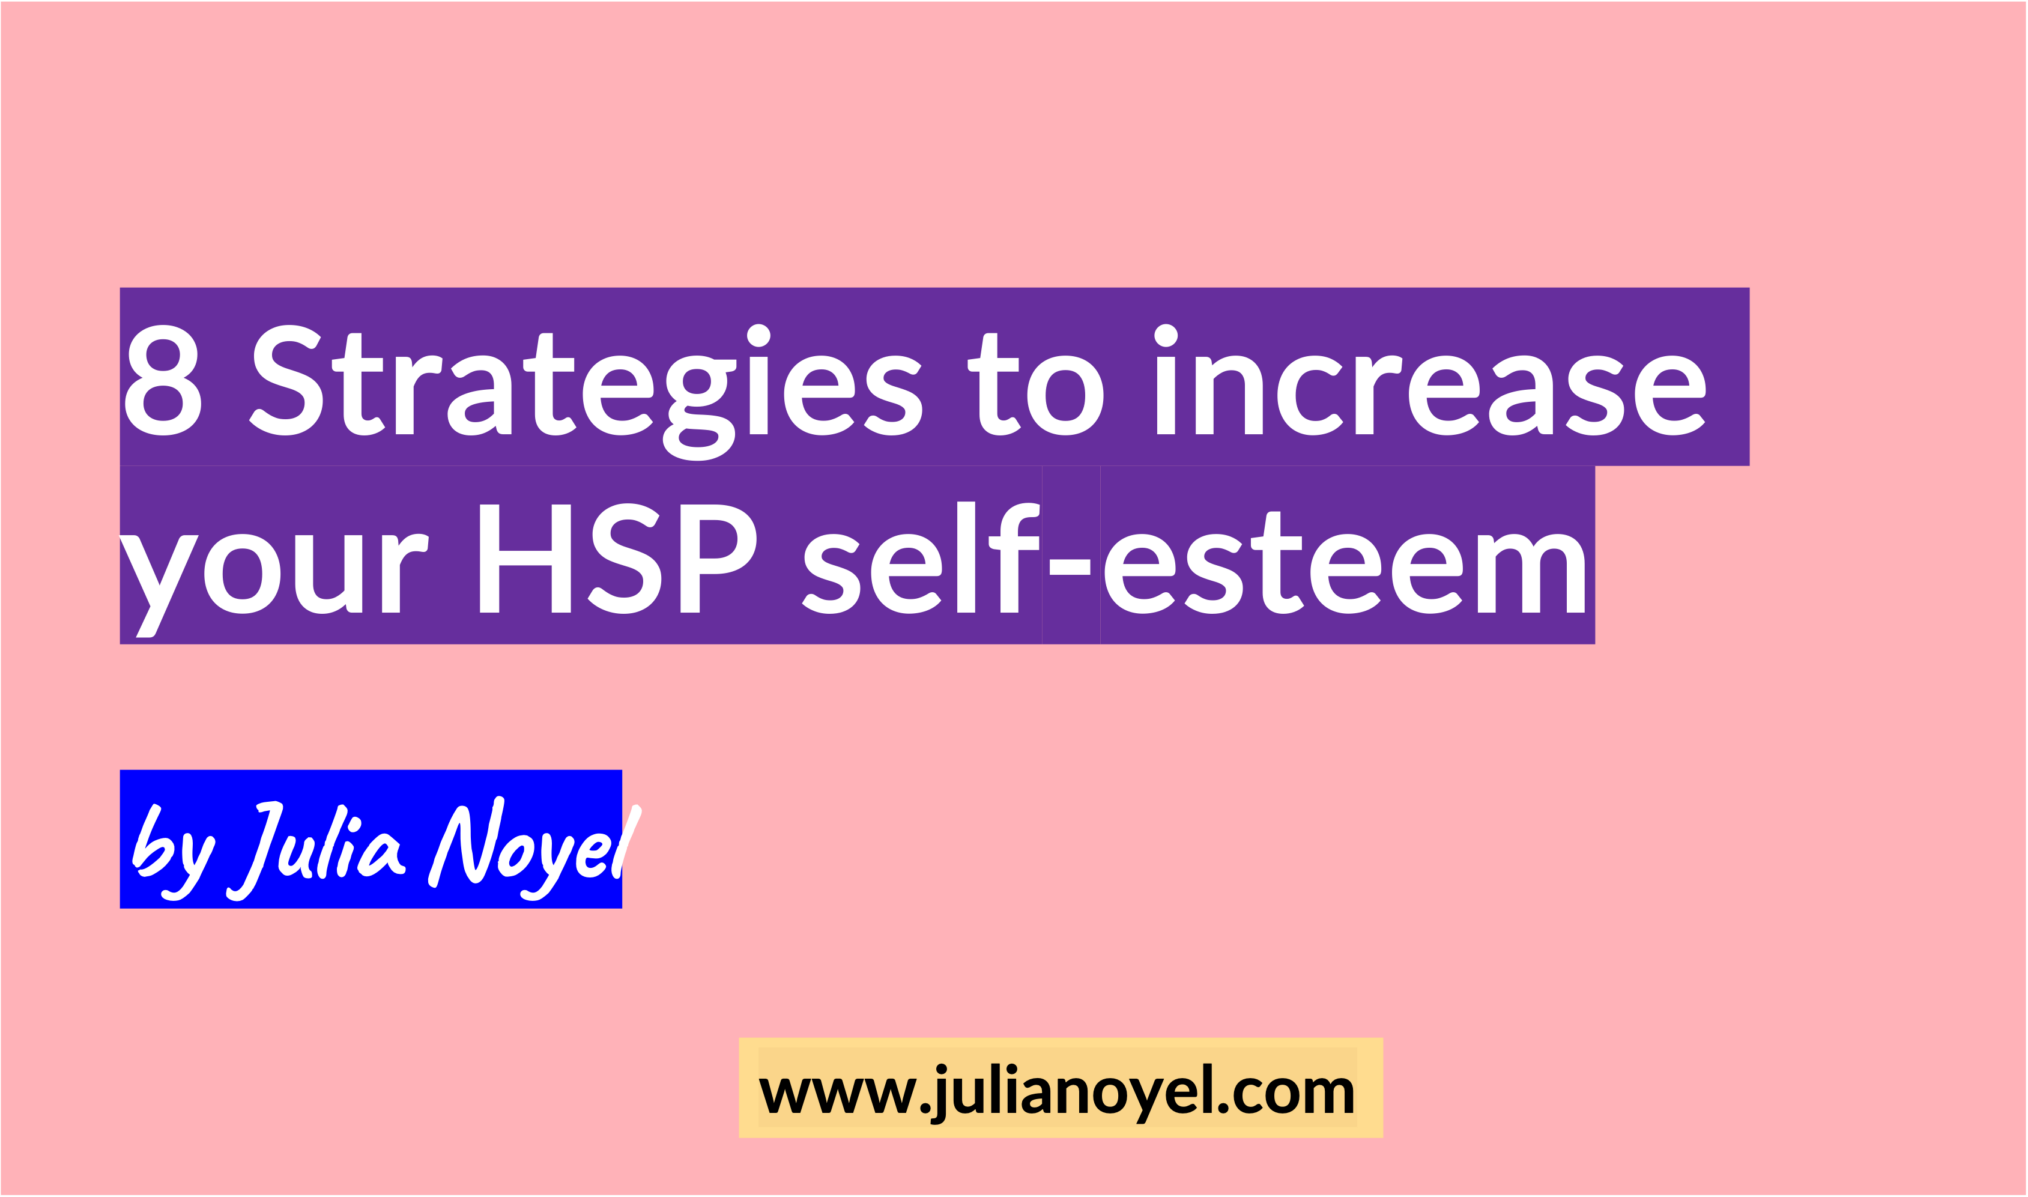 8 Strategies to increase your HSP self-esteem by Julia Noyel